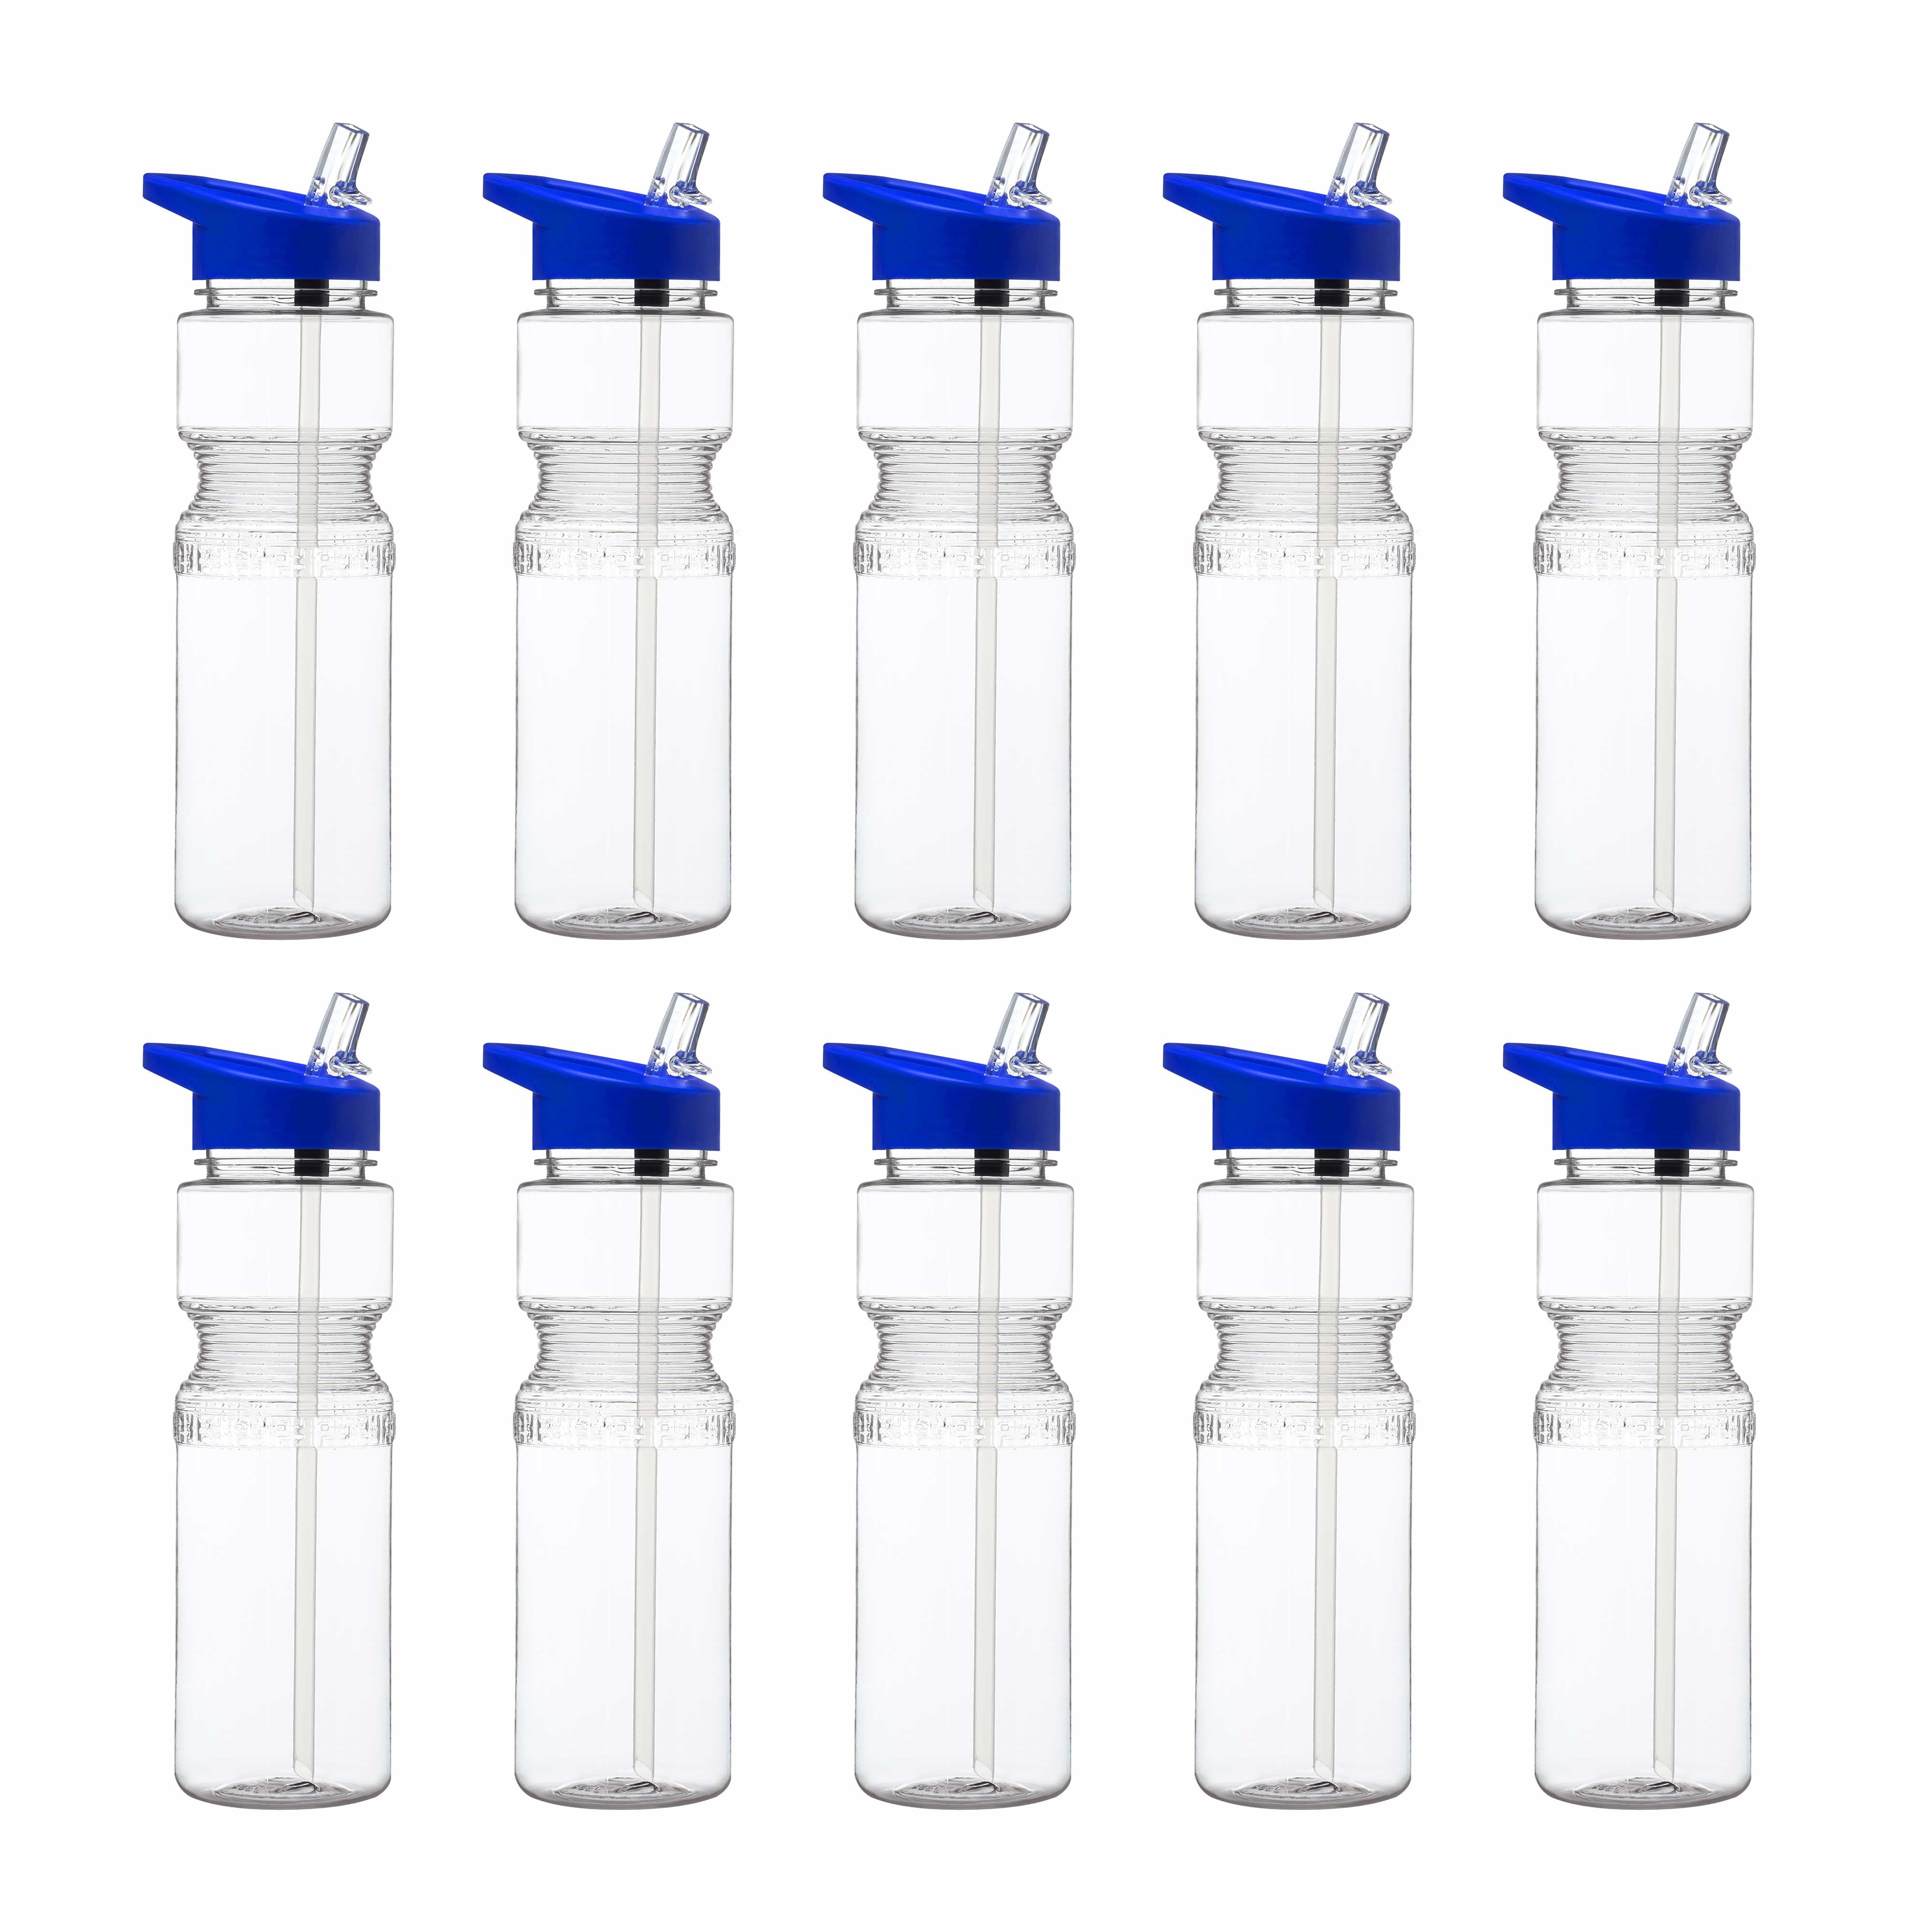 SHAKESPHERE Tumbler Cooler Shaker - Protein Shaker Bottle and Smoothie Cup,  24 oz - Bladeless Blende…See more SHAKESPHERE Tumbler Cooler Shaker 